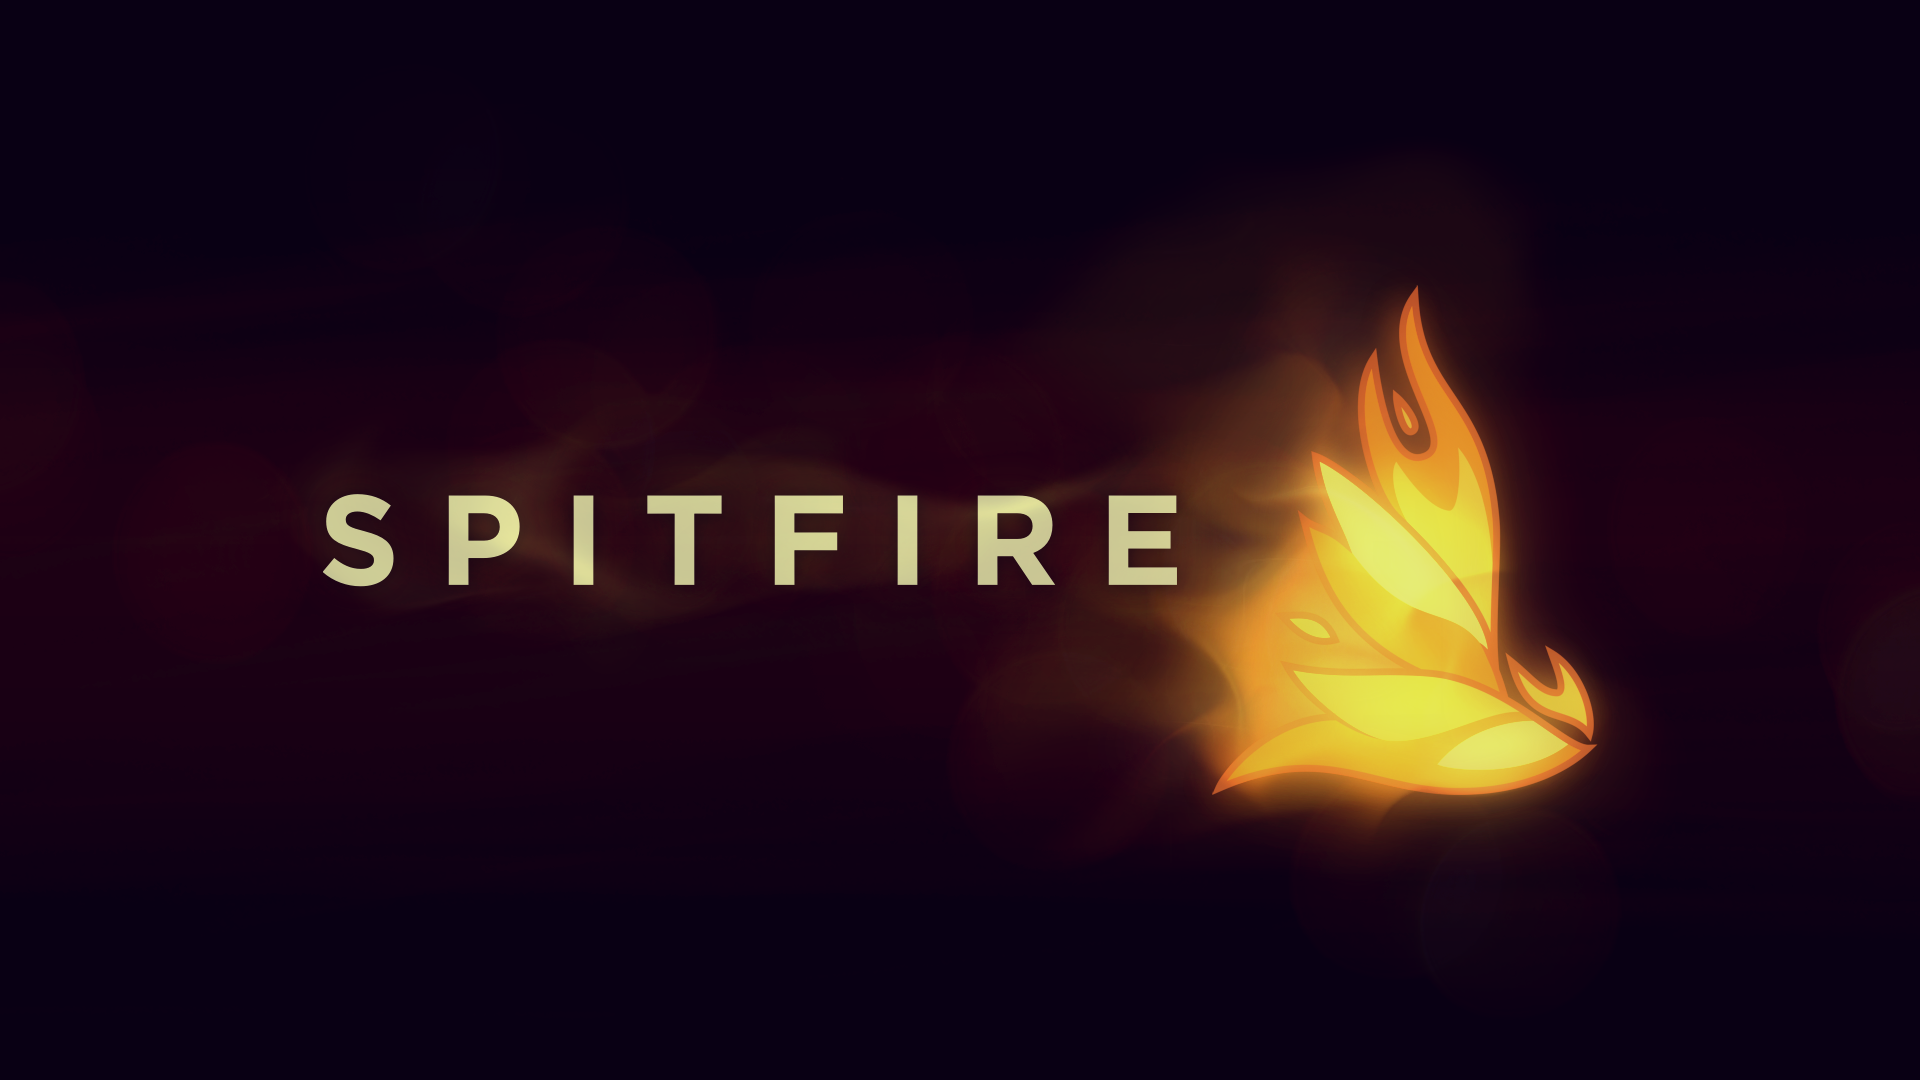 Spitfire Logo Wallpaper Hd Spitfire by impala99 1920x1080